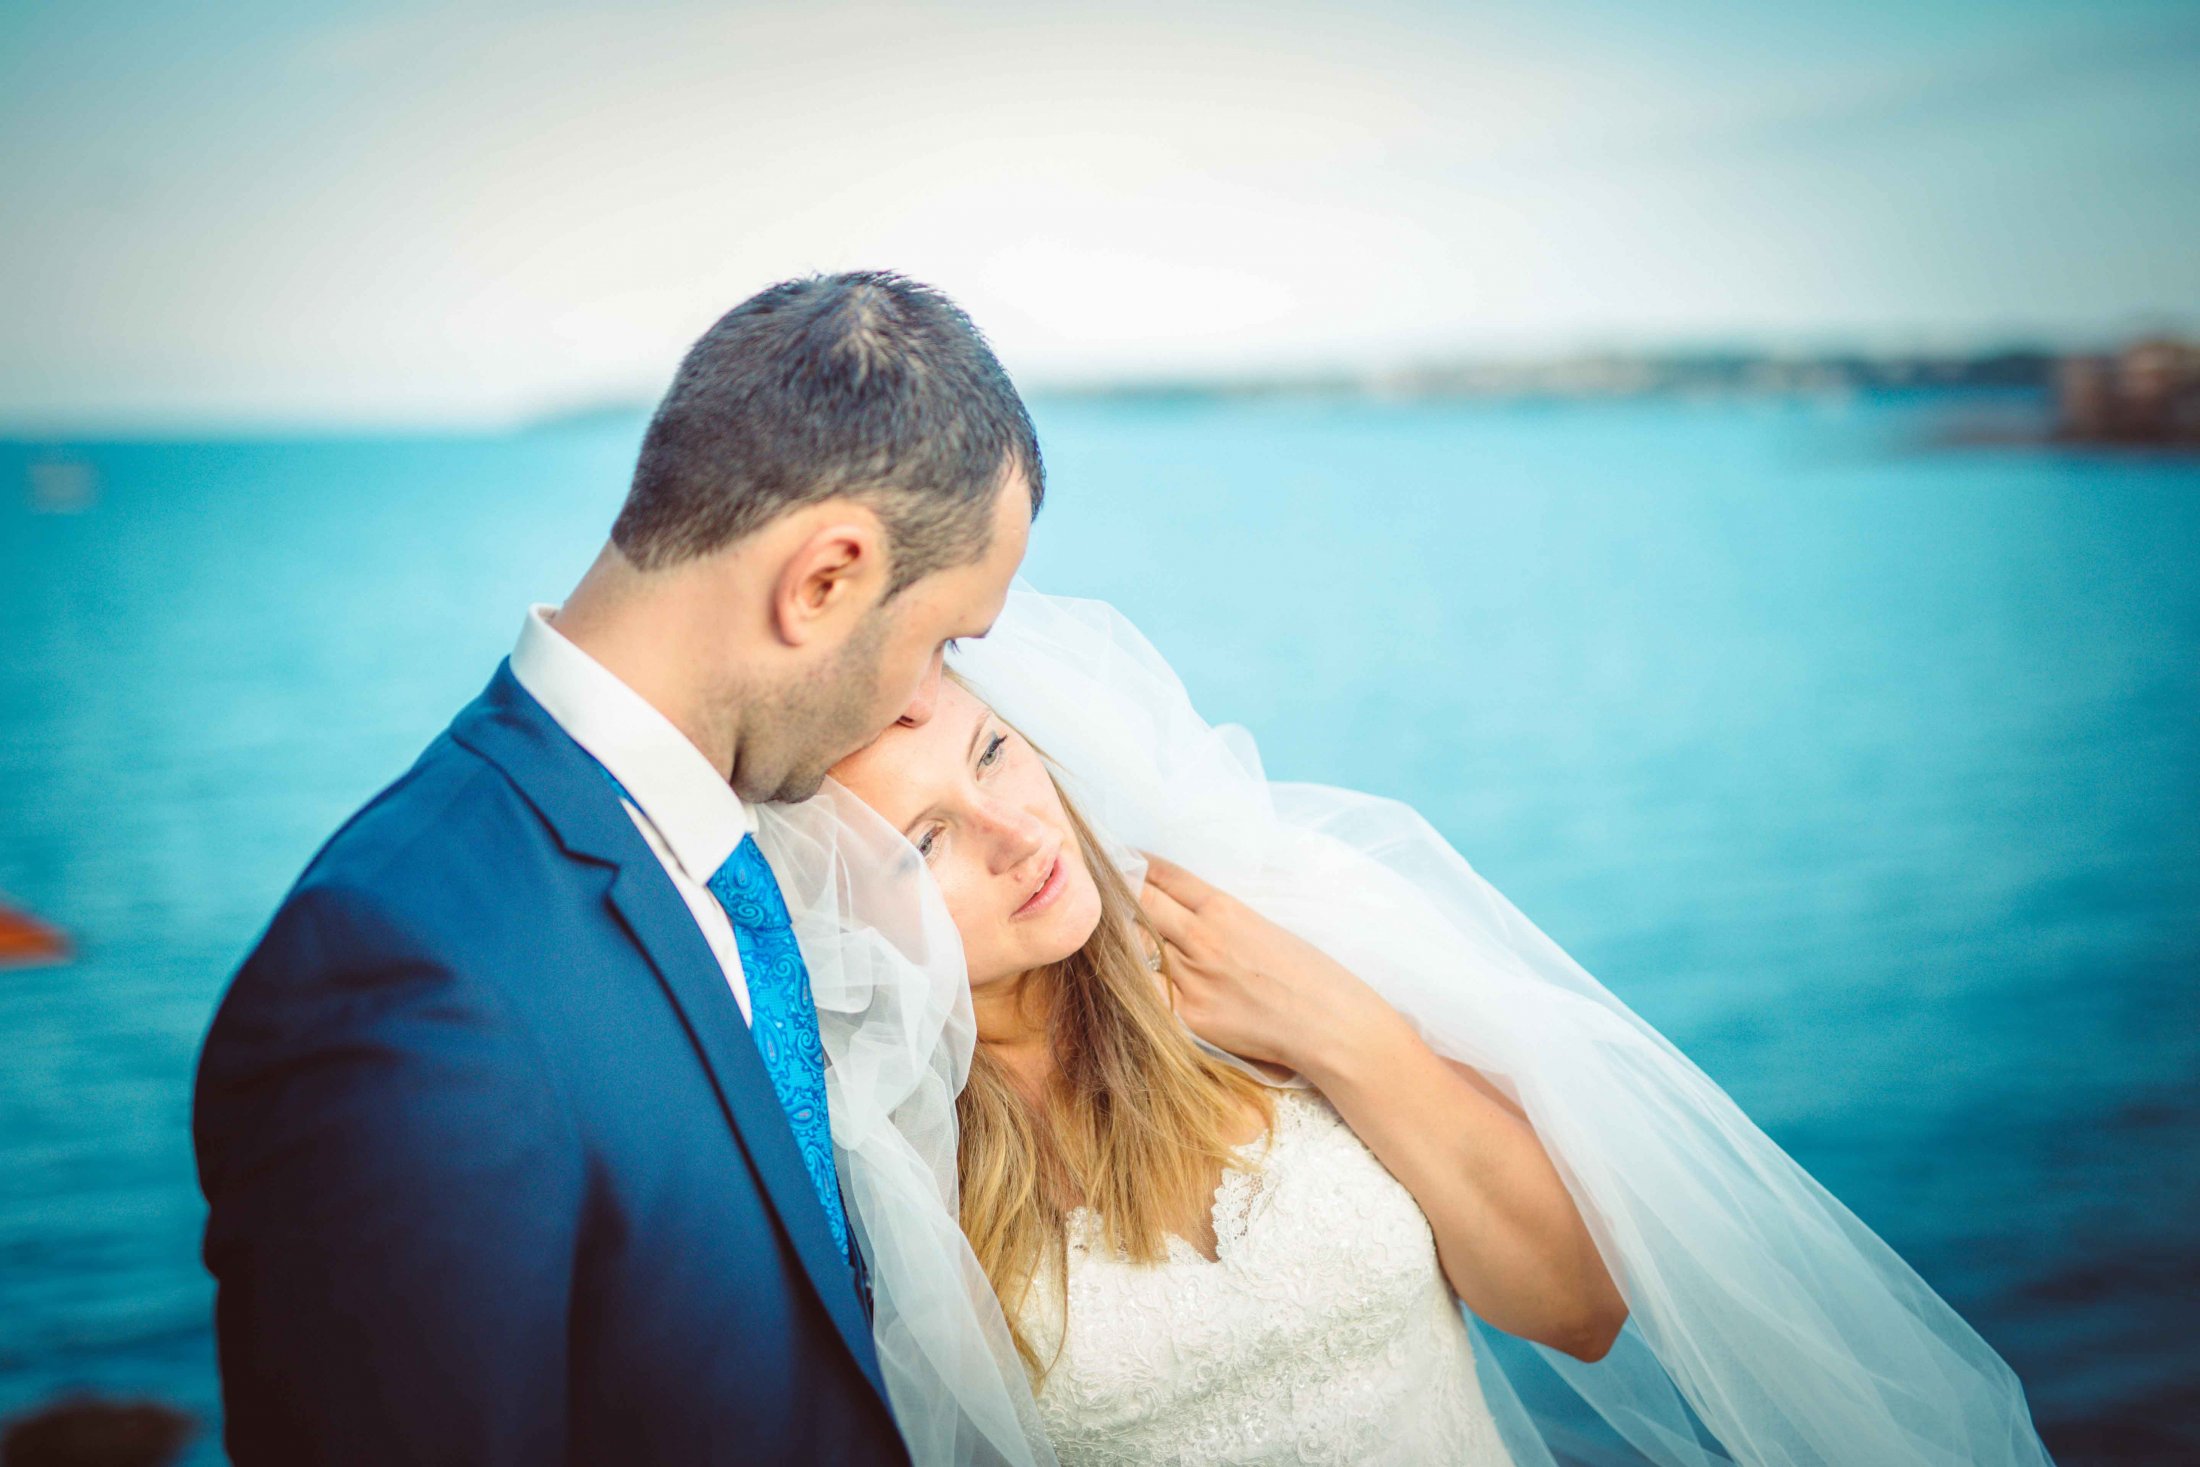 Сватбата на Христо и Ана в Бургас - сватбен фотографот студио Скайвю, Пловдив